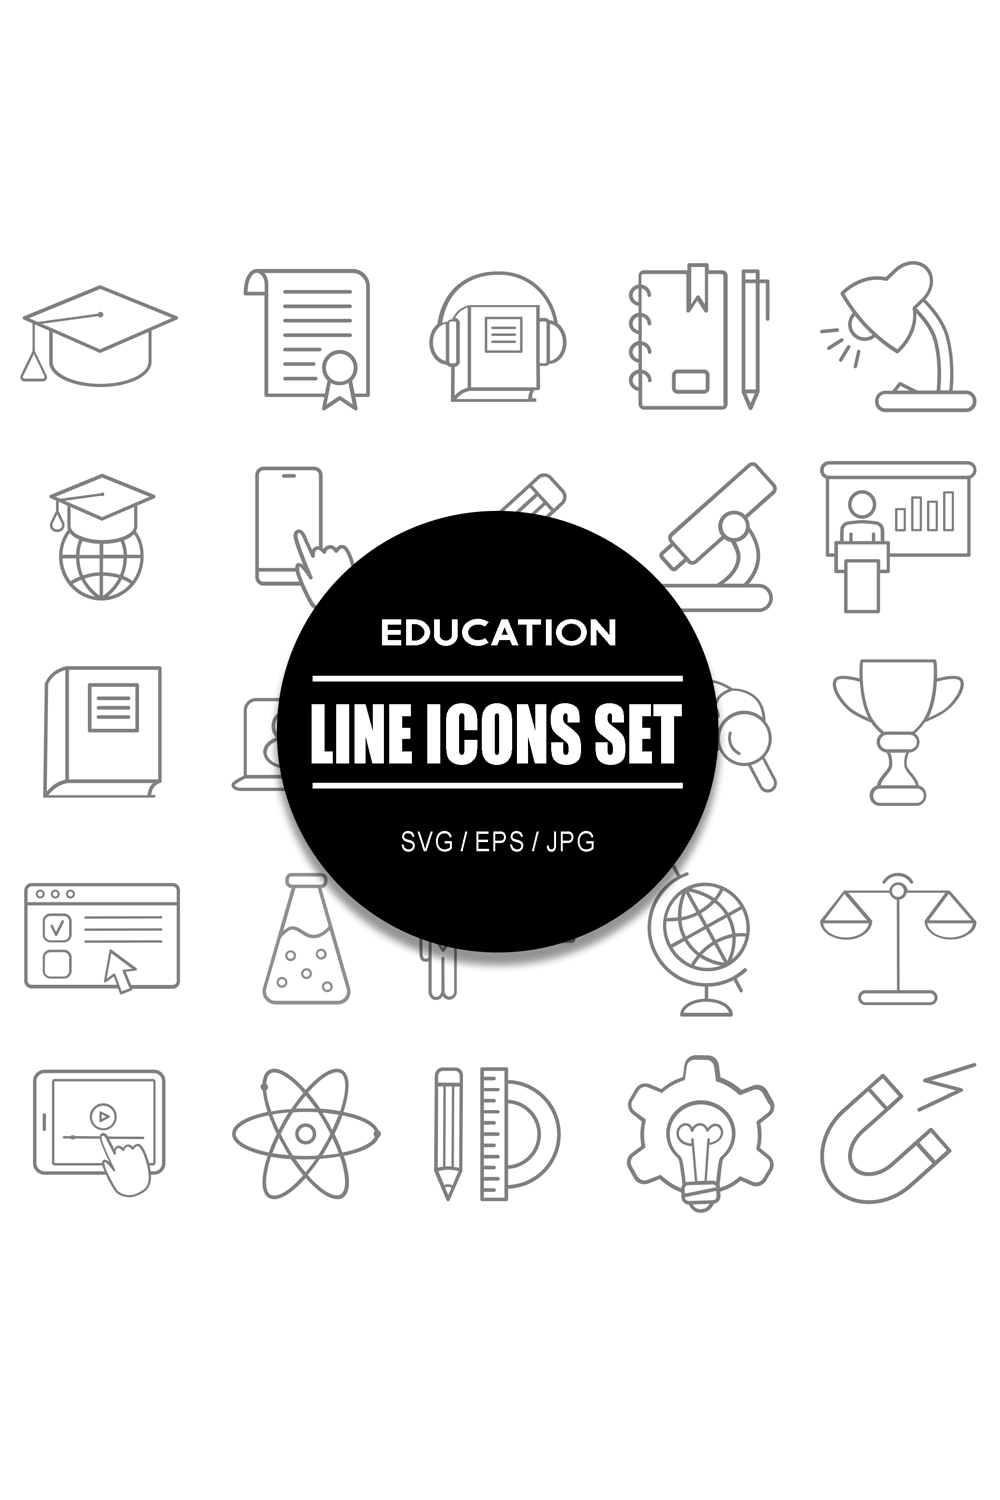 Education Line Icon Set pinterest preview image.